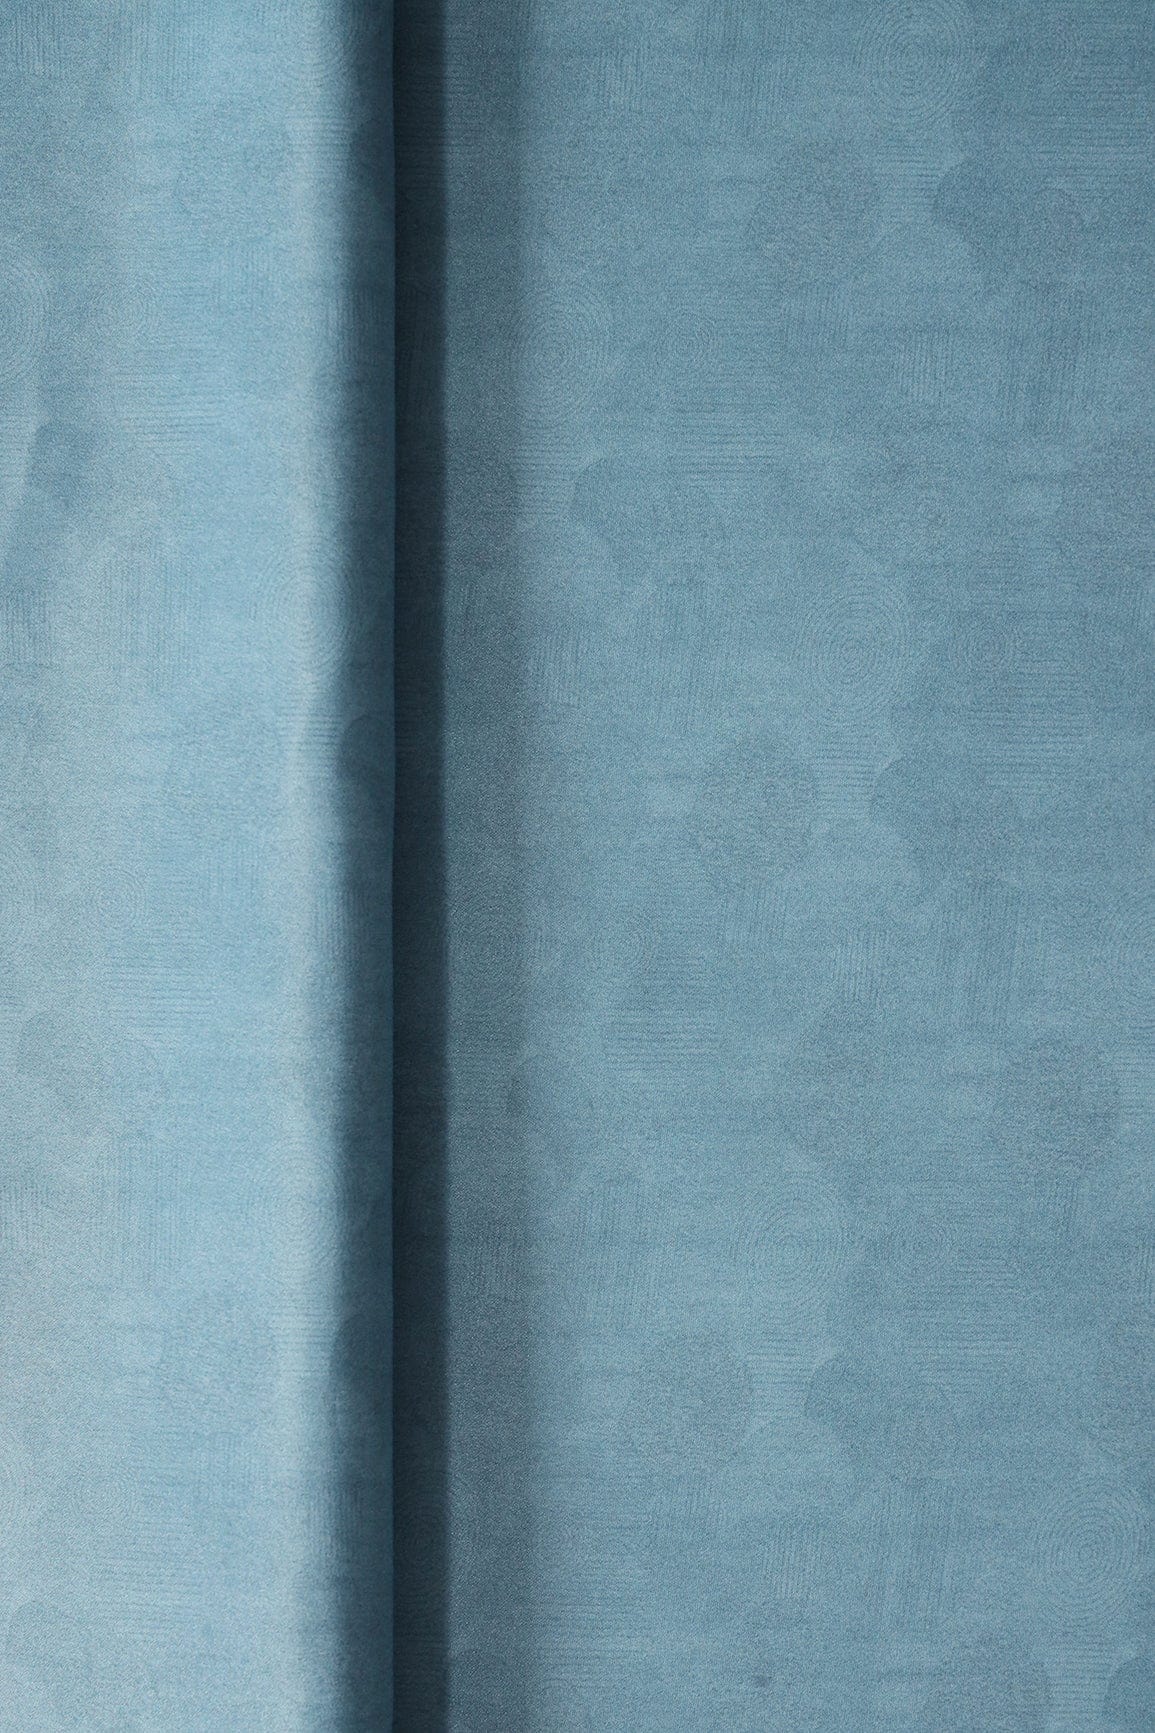 doeraa Prints Pastel Blue Texture Pattern Digital Print On French Crepe Fabric